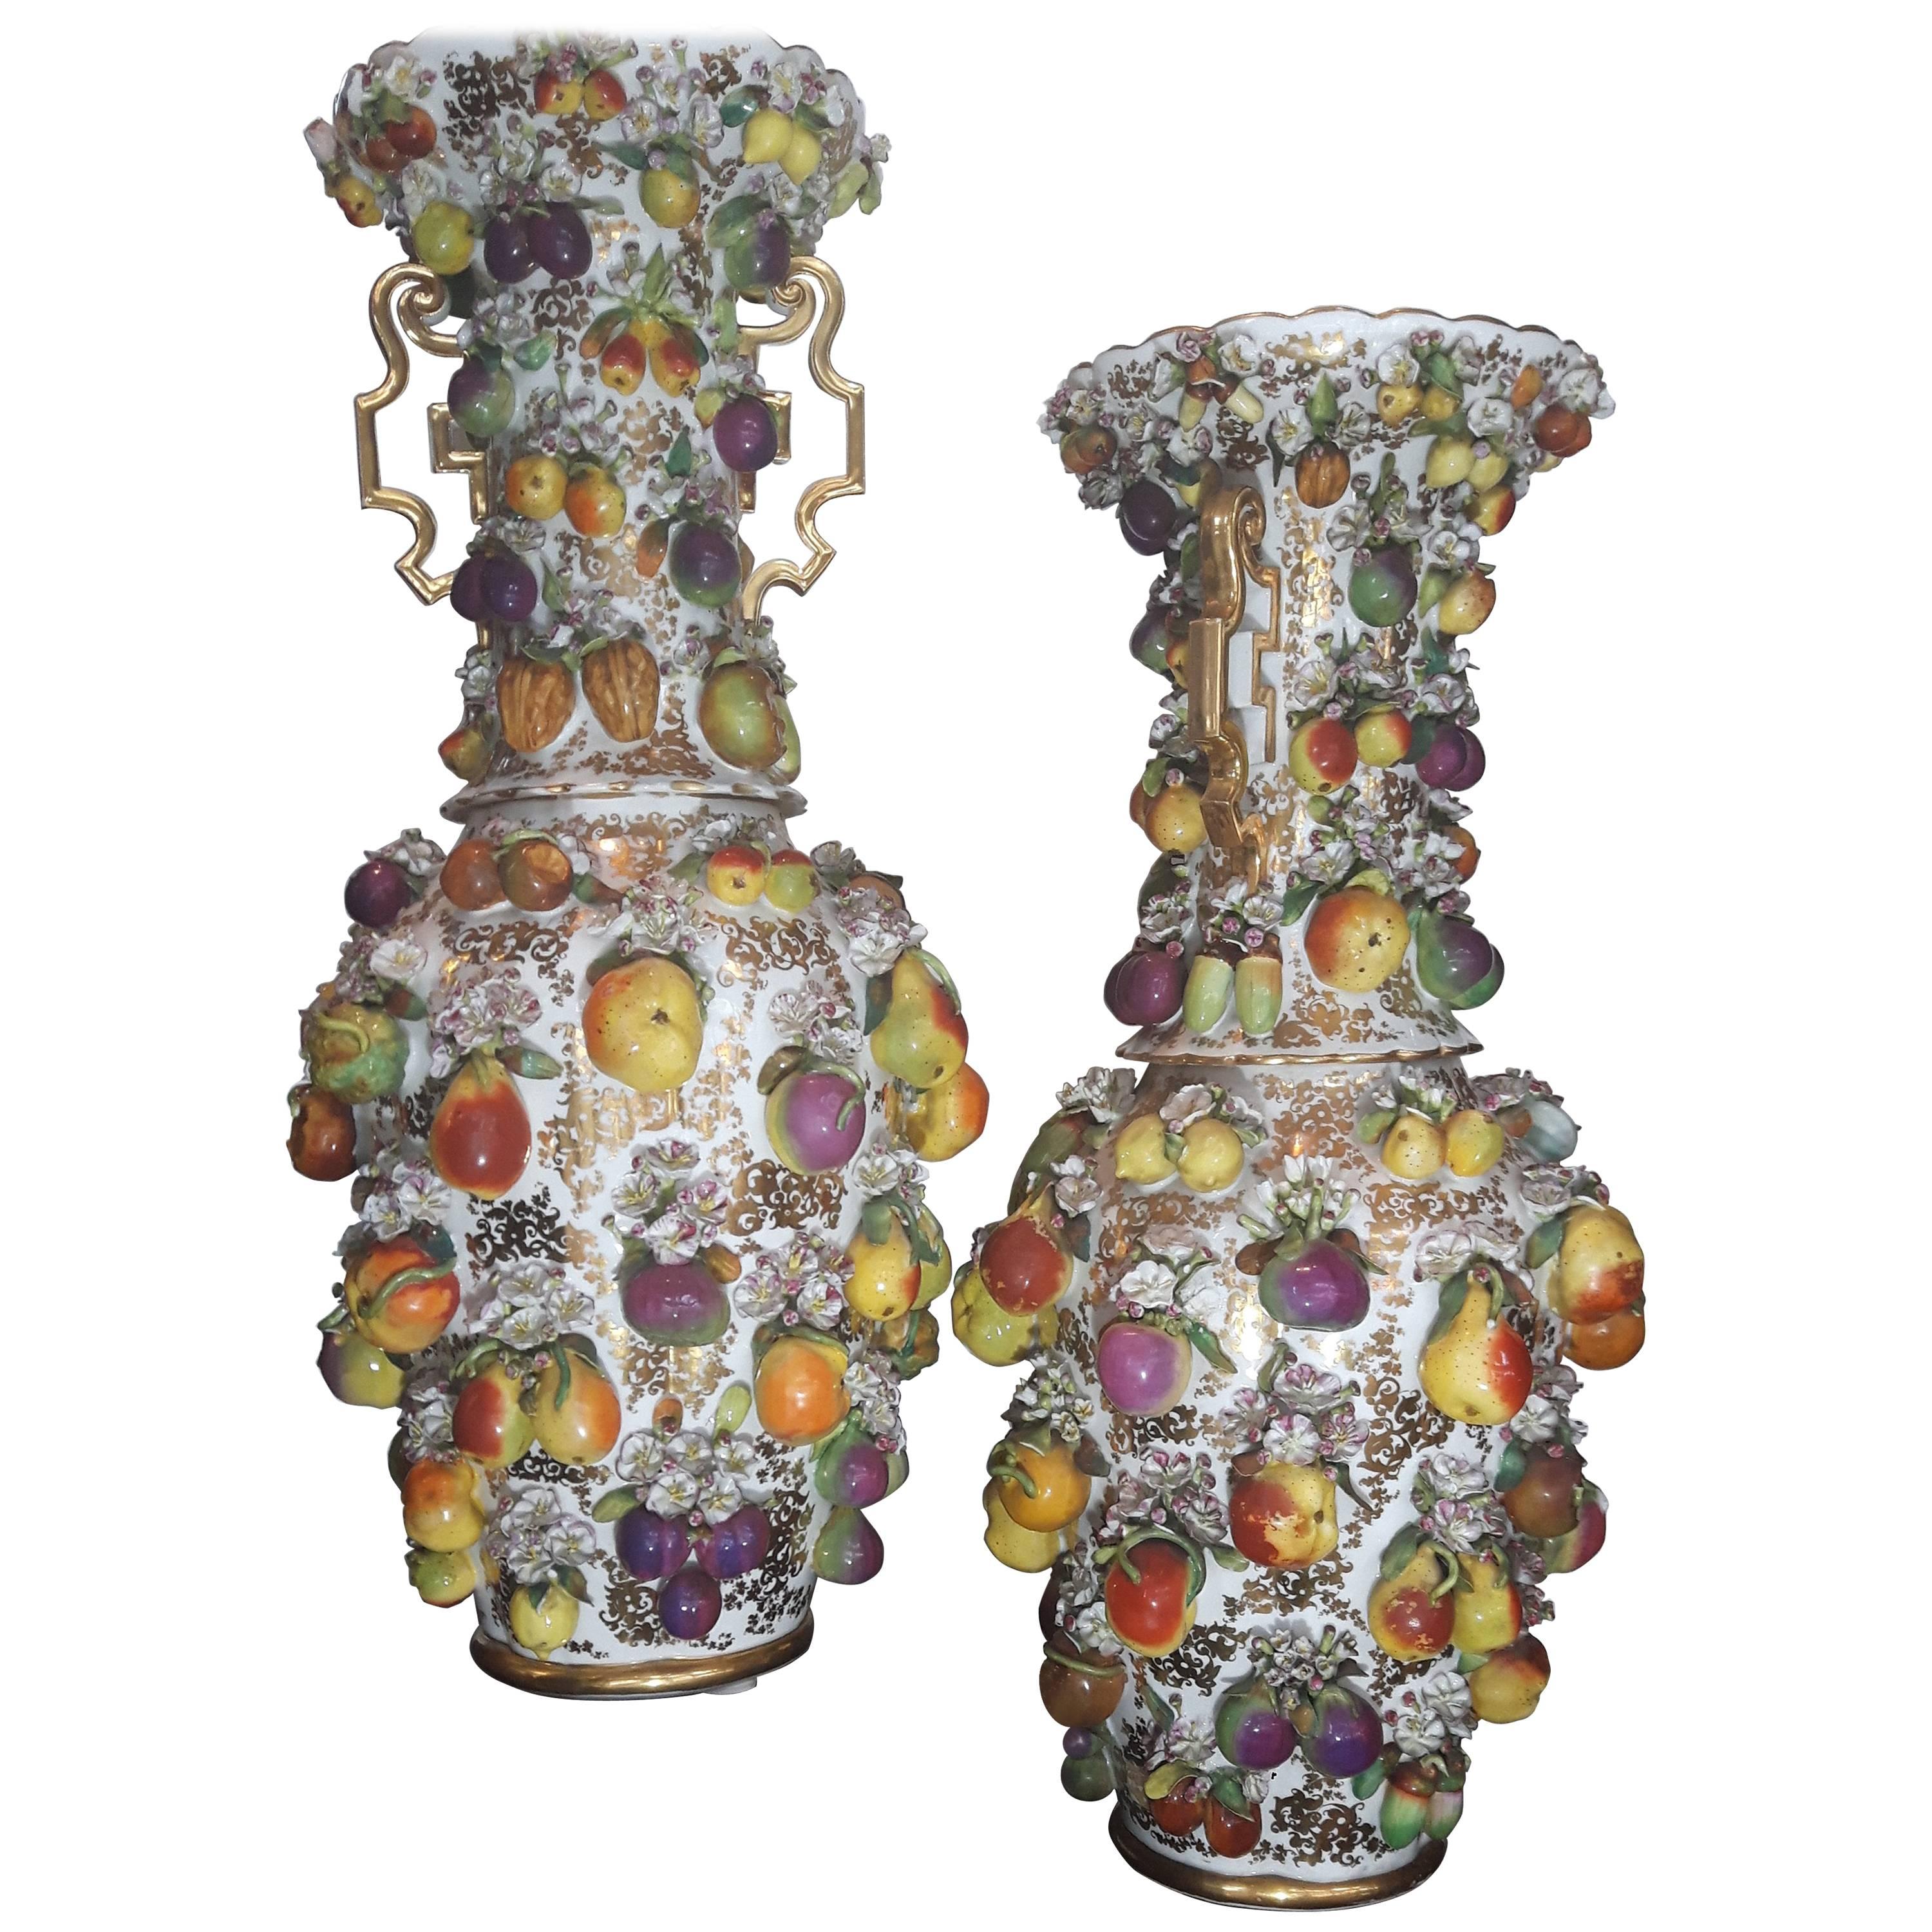 Pair of Continental Porcelain Schneeballen Vases, Late 19th Century